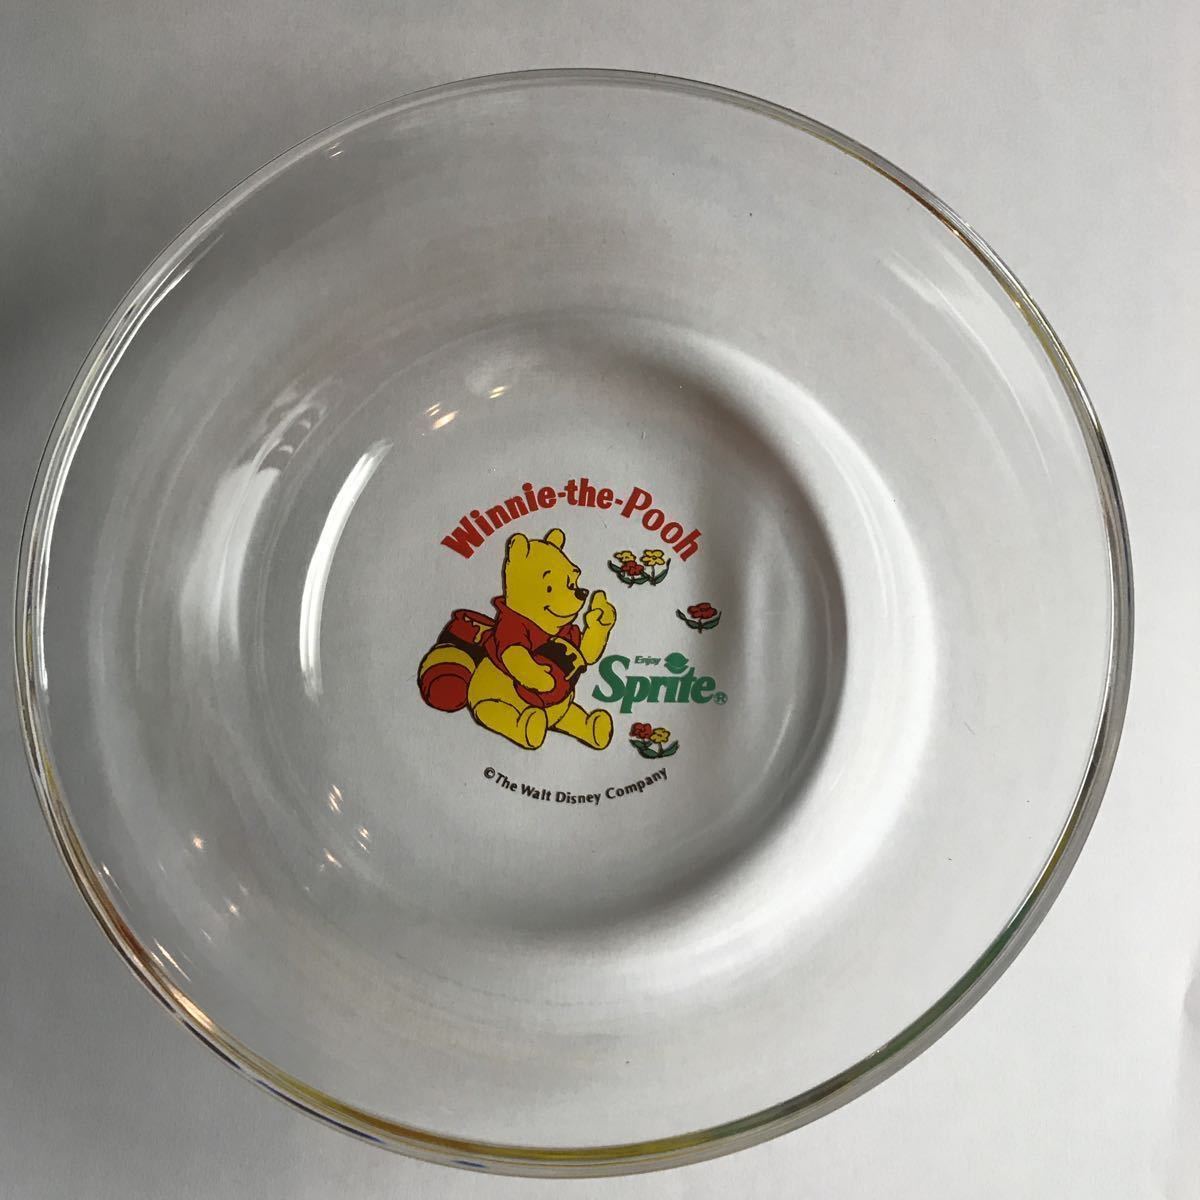  Winnie The Pooh glass bowl sprite 3 piece set Disney Coca * Cola not for sale Novelty Showa Retro glass plate rare 